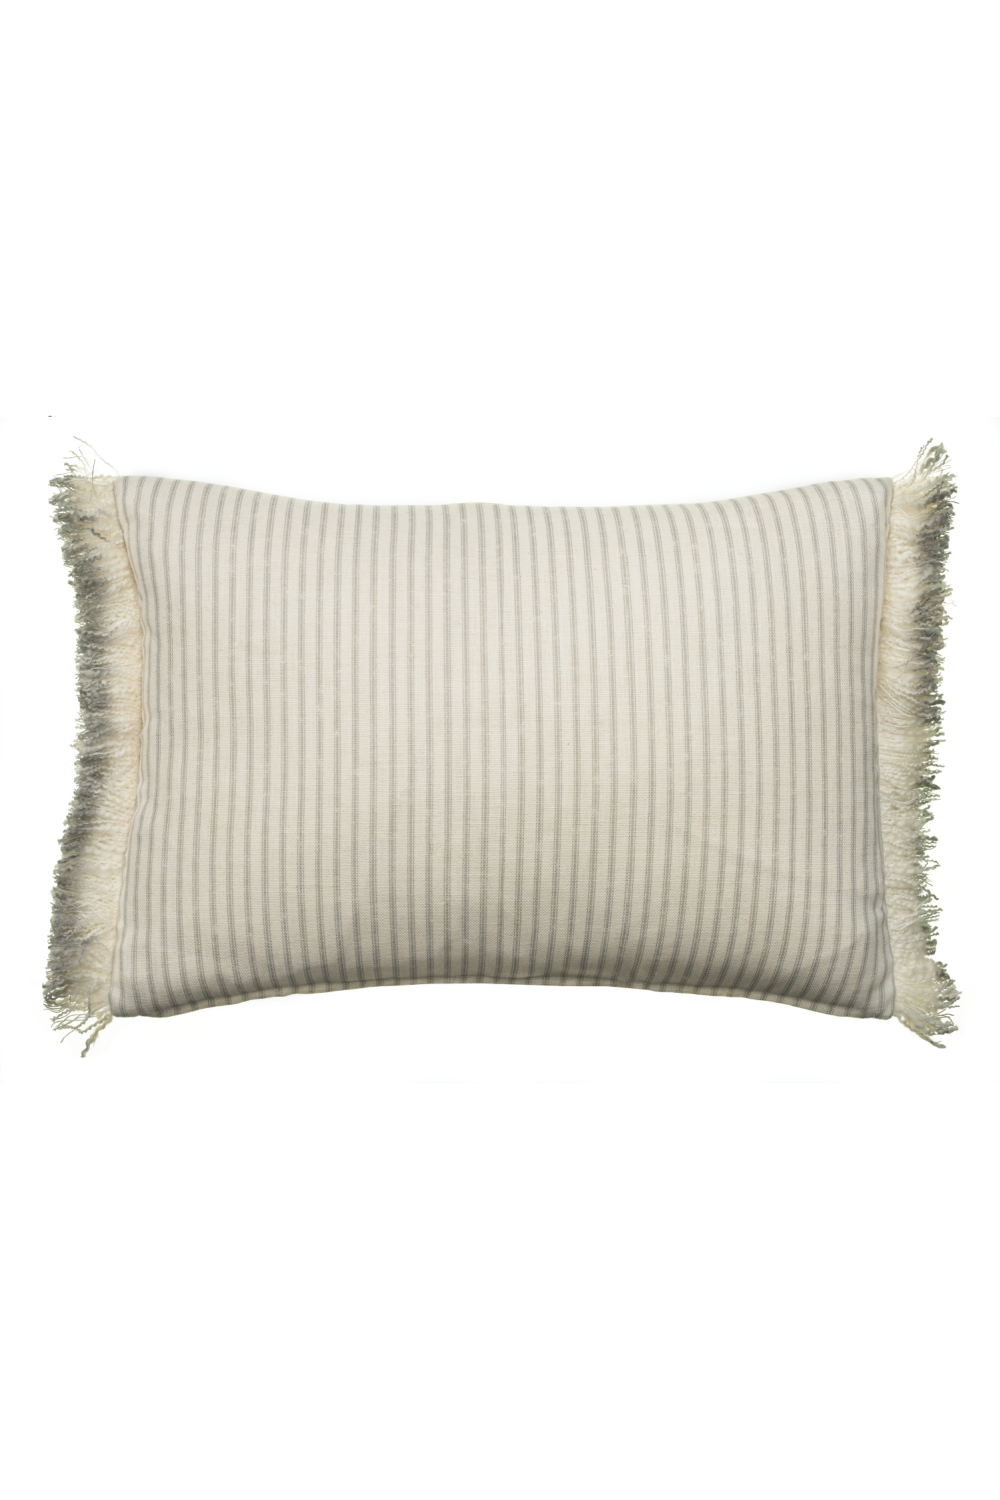 Stripe Cushion With Fringes | Andrew Martin Picket Leaf | Oroa.com